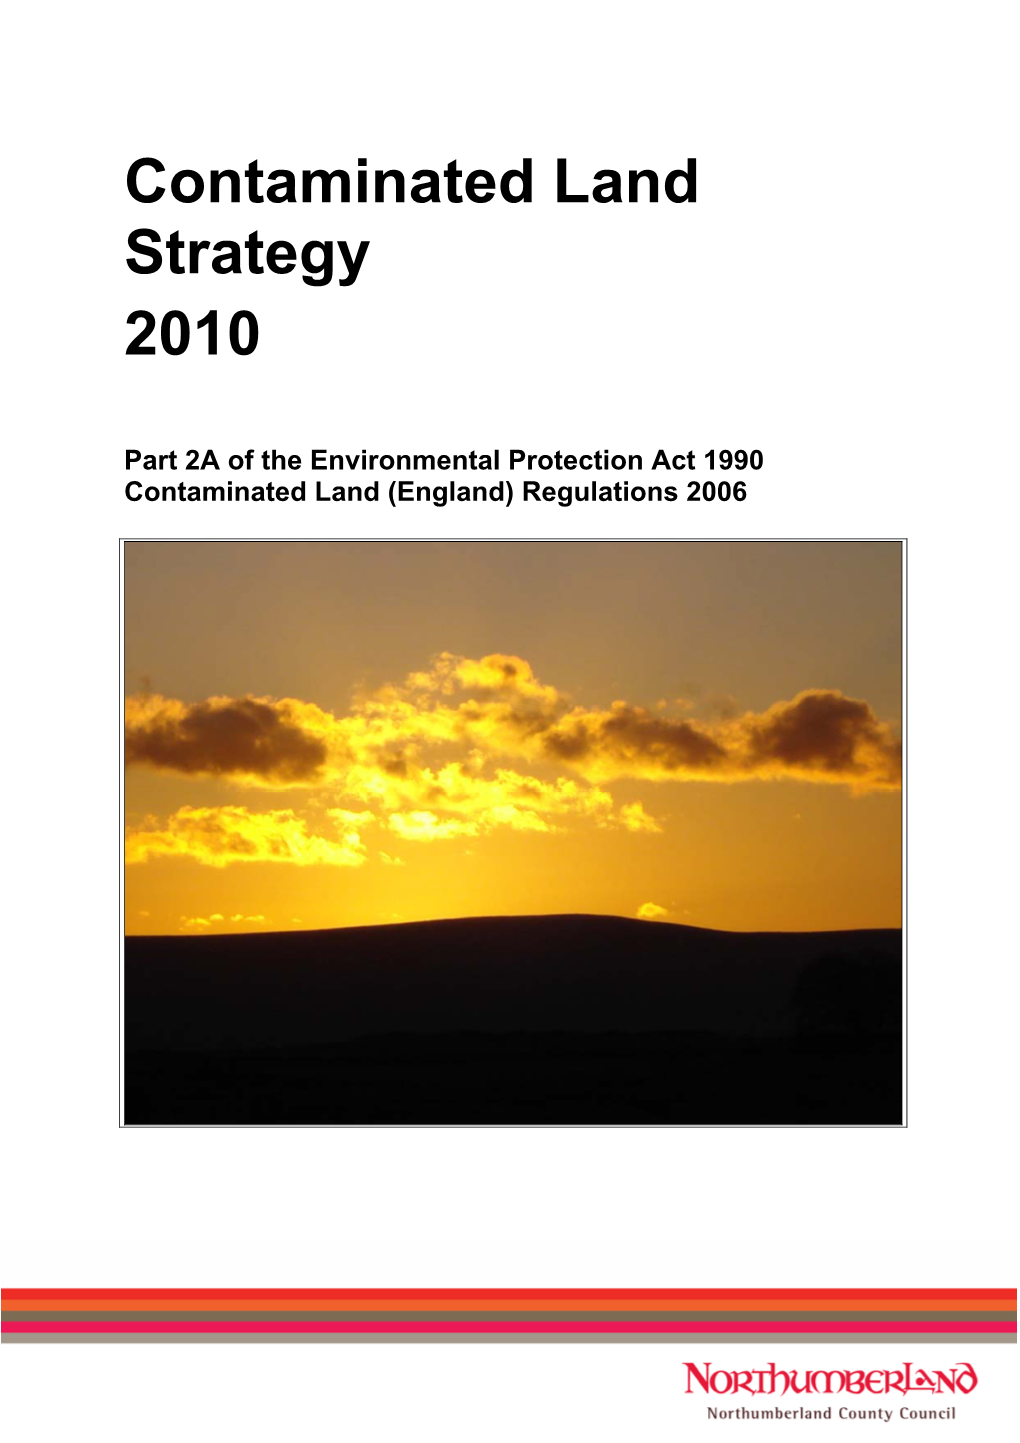 Contaminated Land Strategy 2010